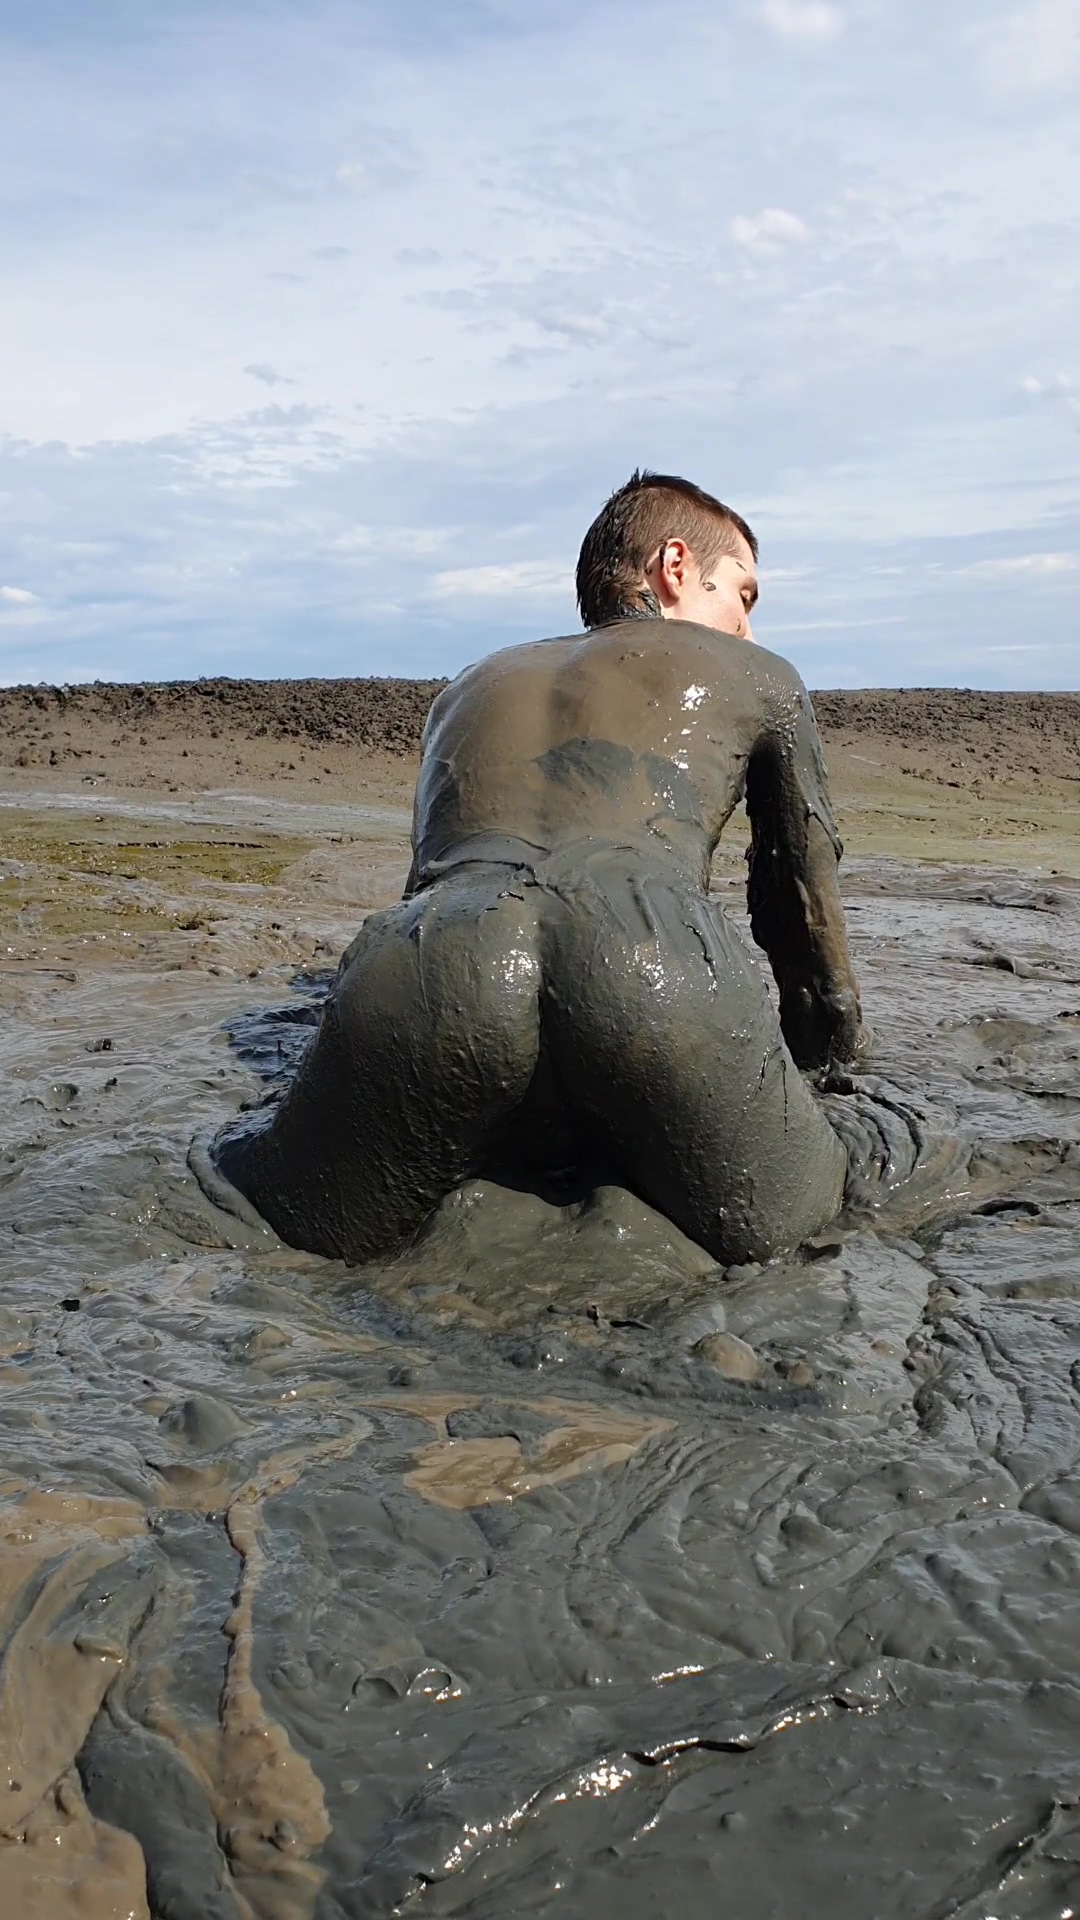 aj stevens recommends Naked Men In Mud